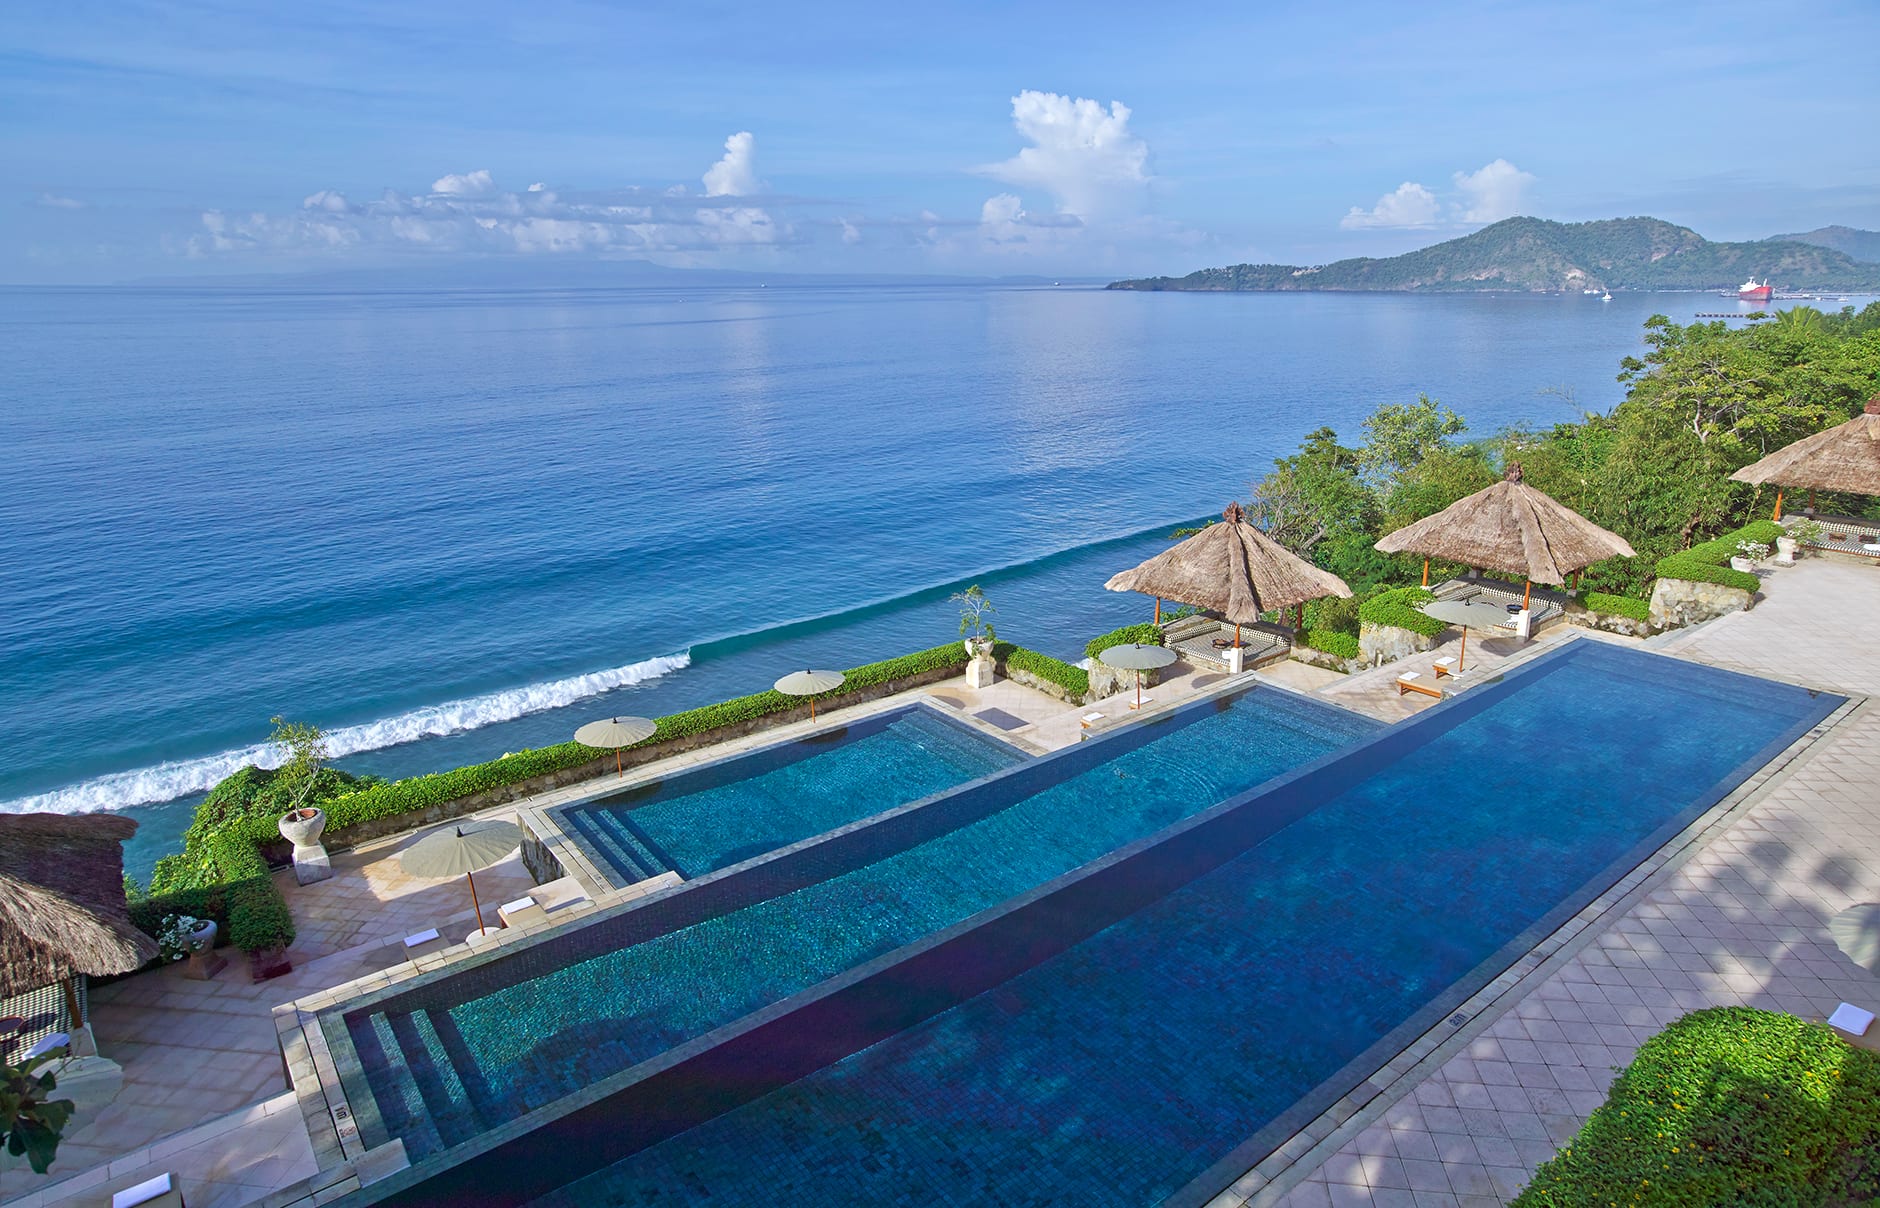 Amankila, Bali • Luxury Hotels TravelPlusStyle